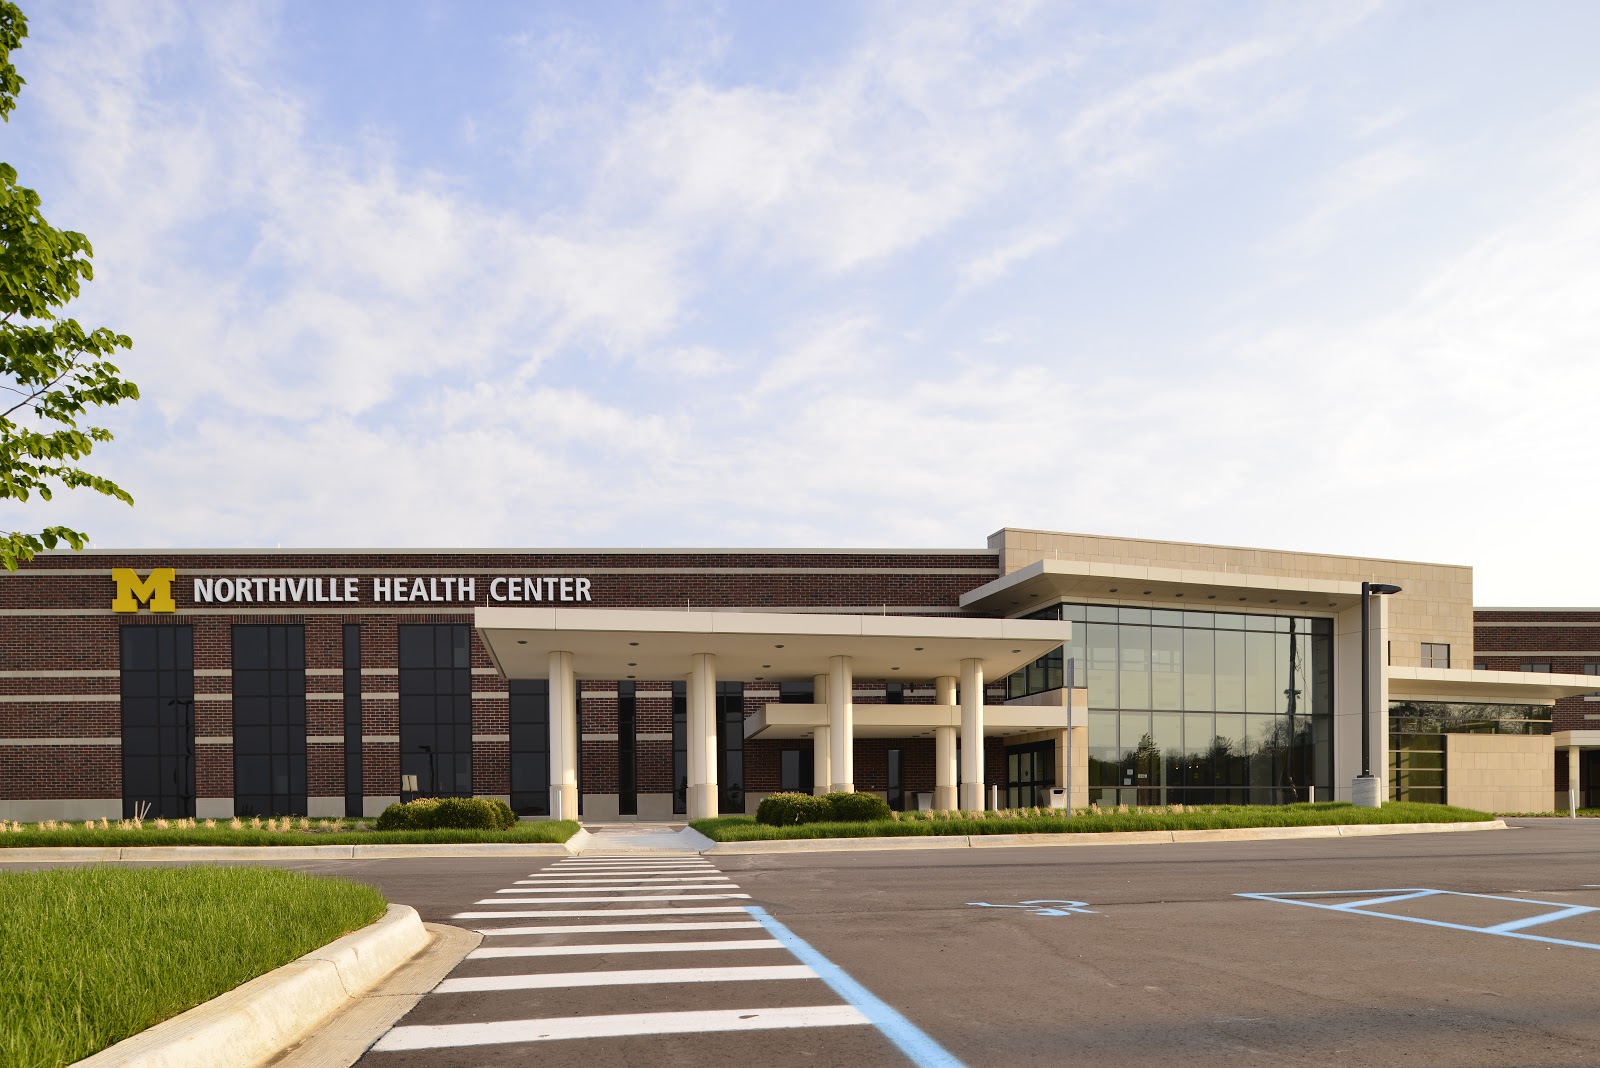 Michigan Medicine - Northville Health Center